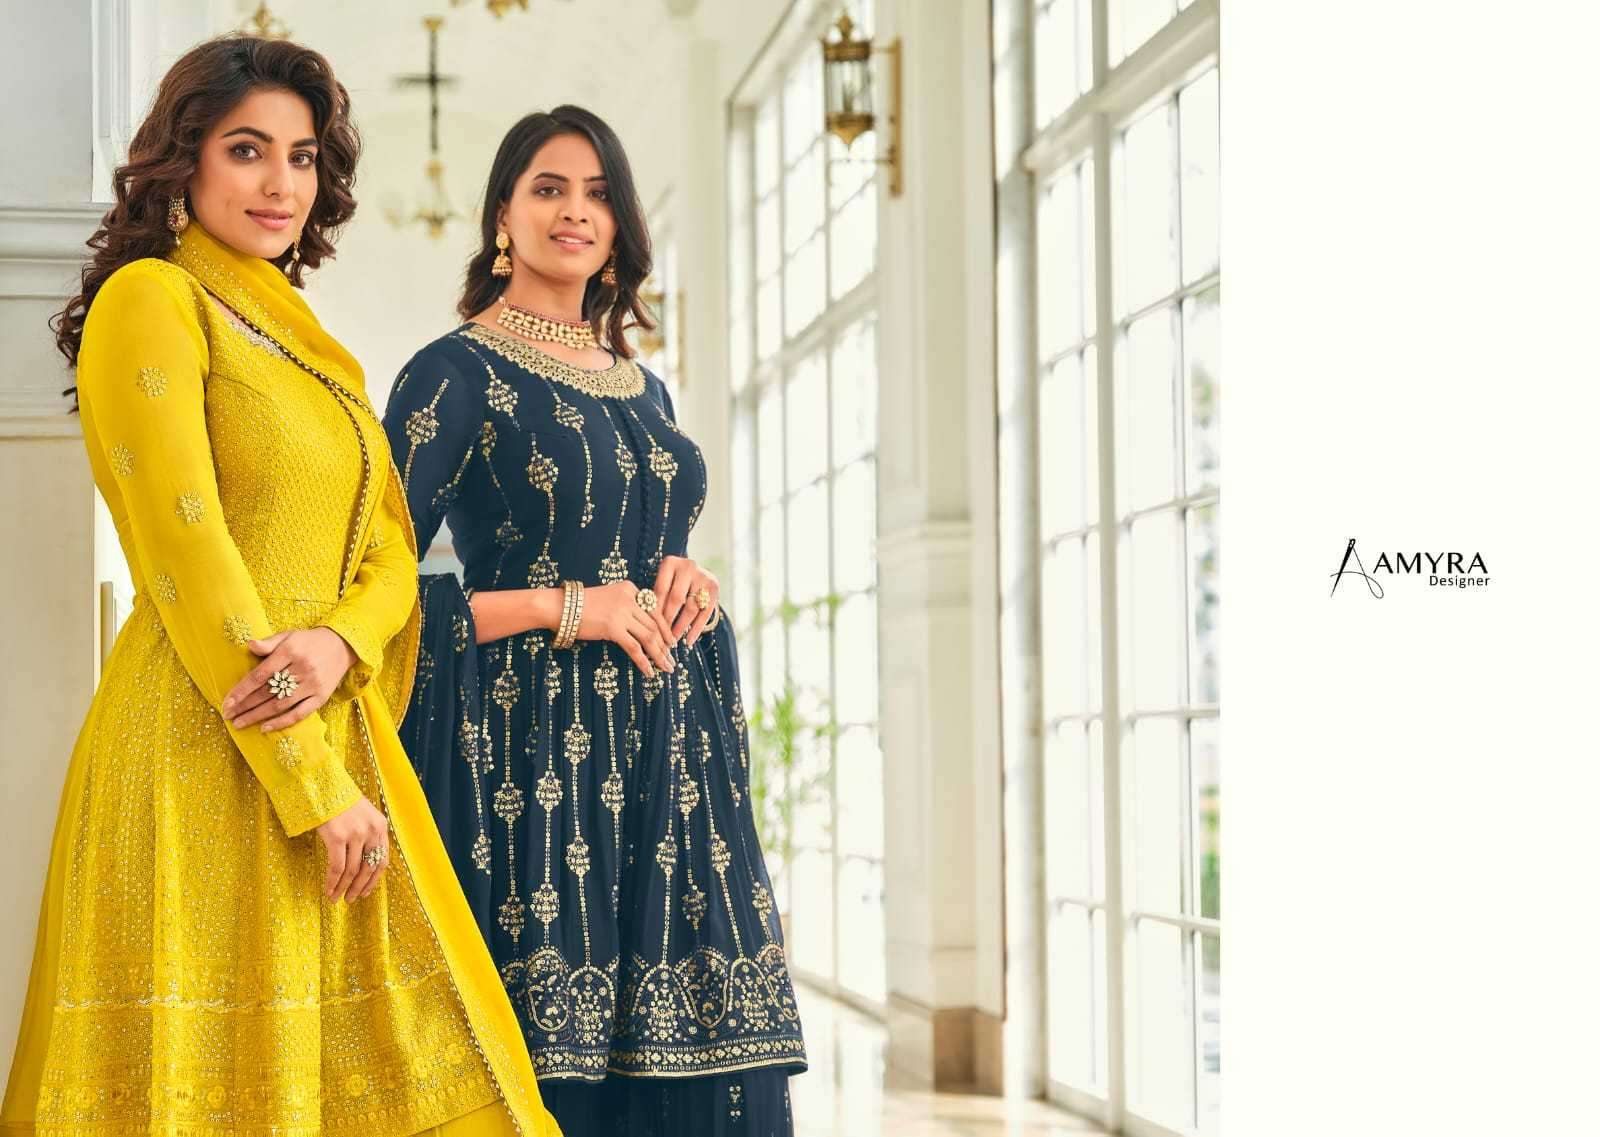 Amyra Zarkash vol 3 catalog Exclusive Designer Salwar suits Wholesale Rate In Surat - SaiDharaNx  